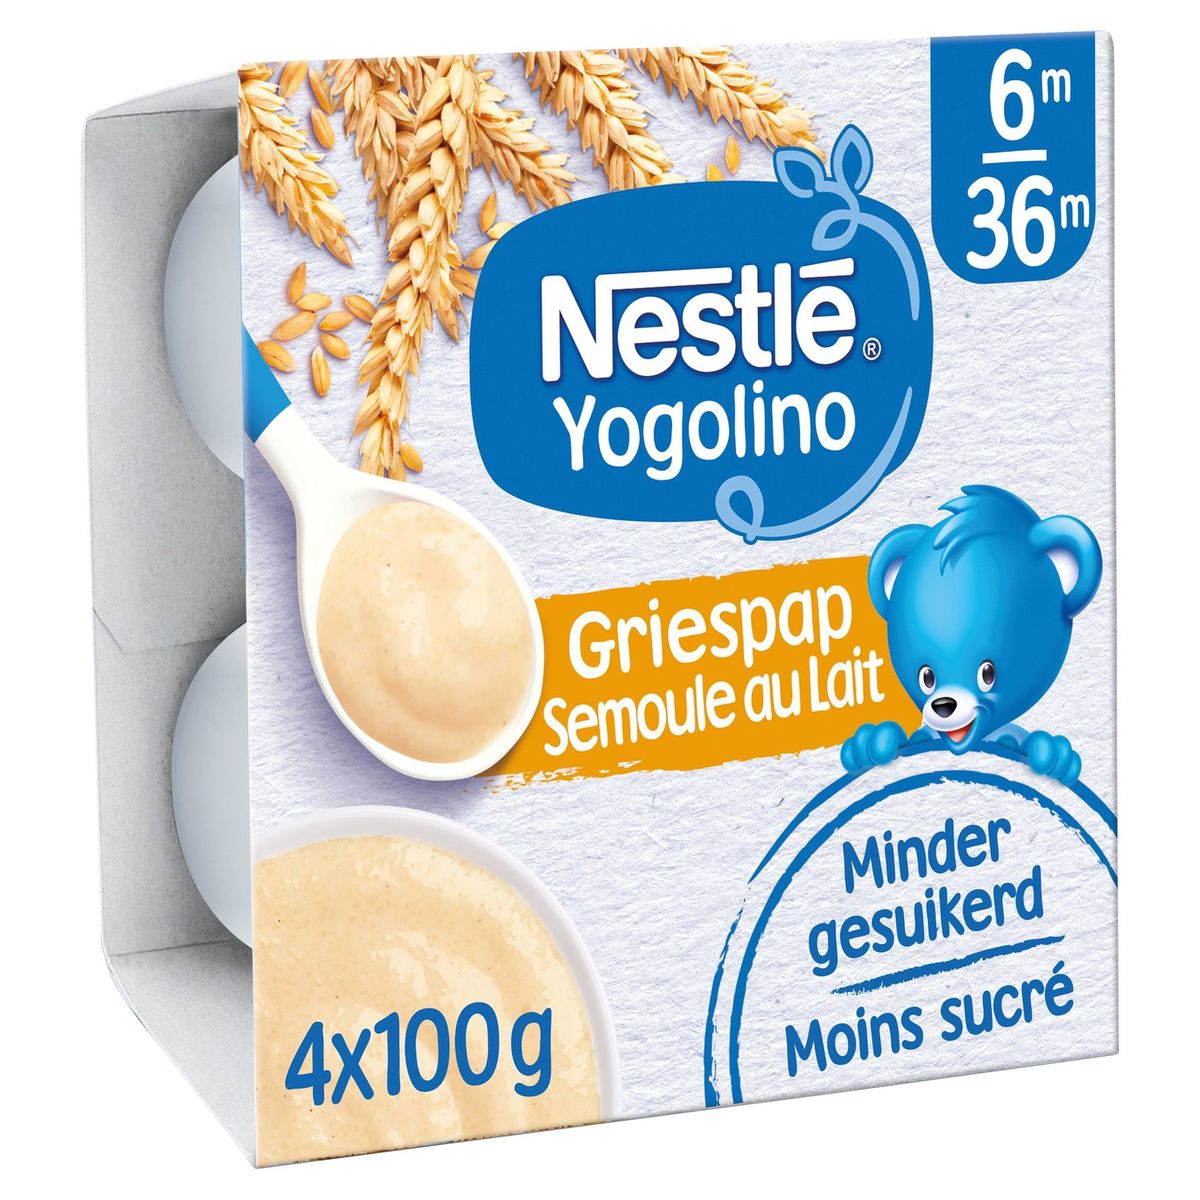 Nestlé Yogolino Griespap 6M - 36 M 4 x 100 g